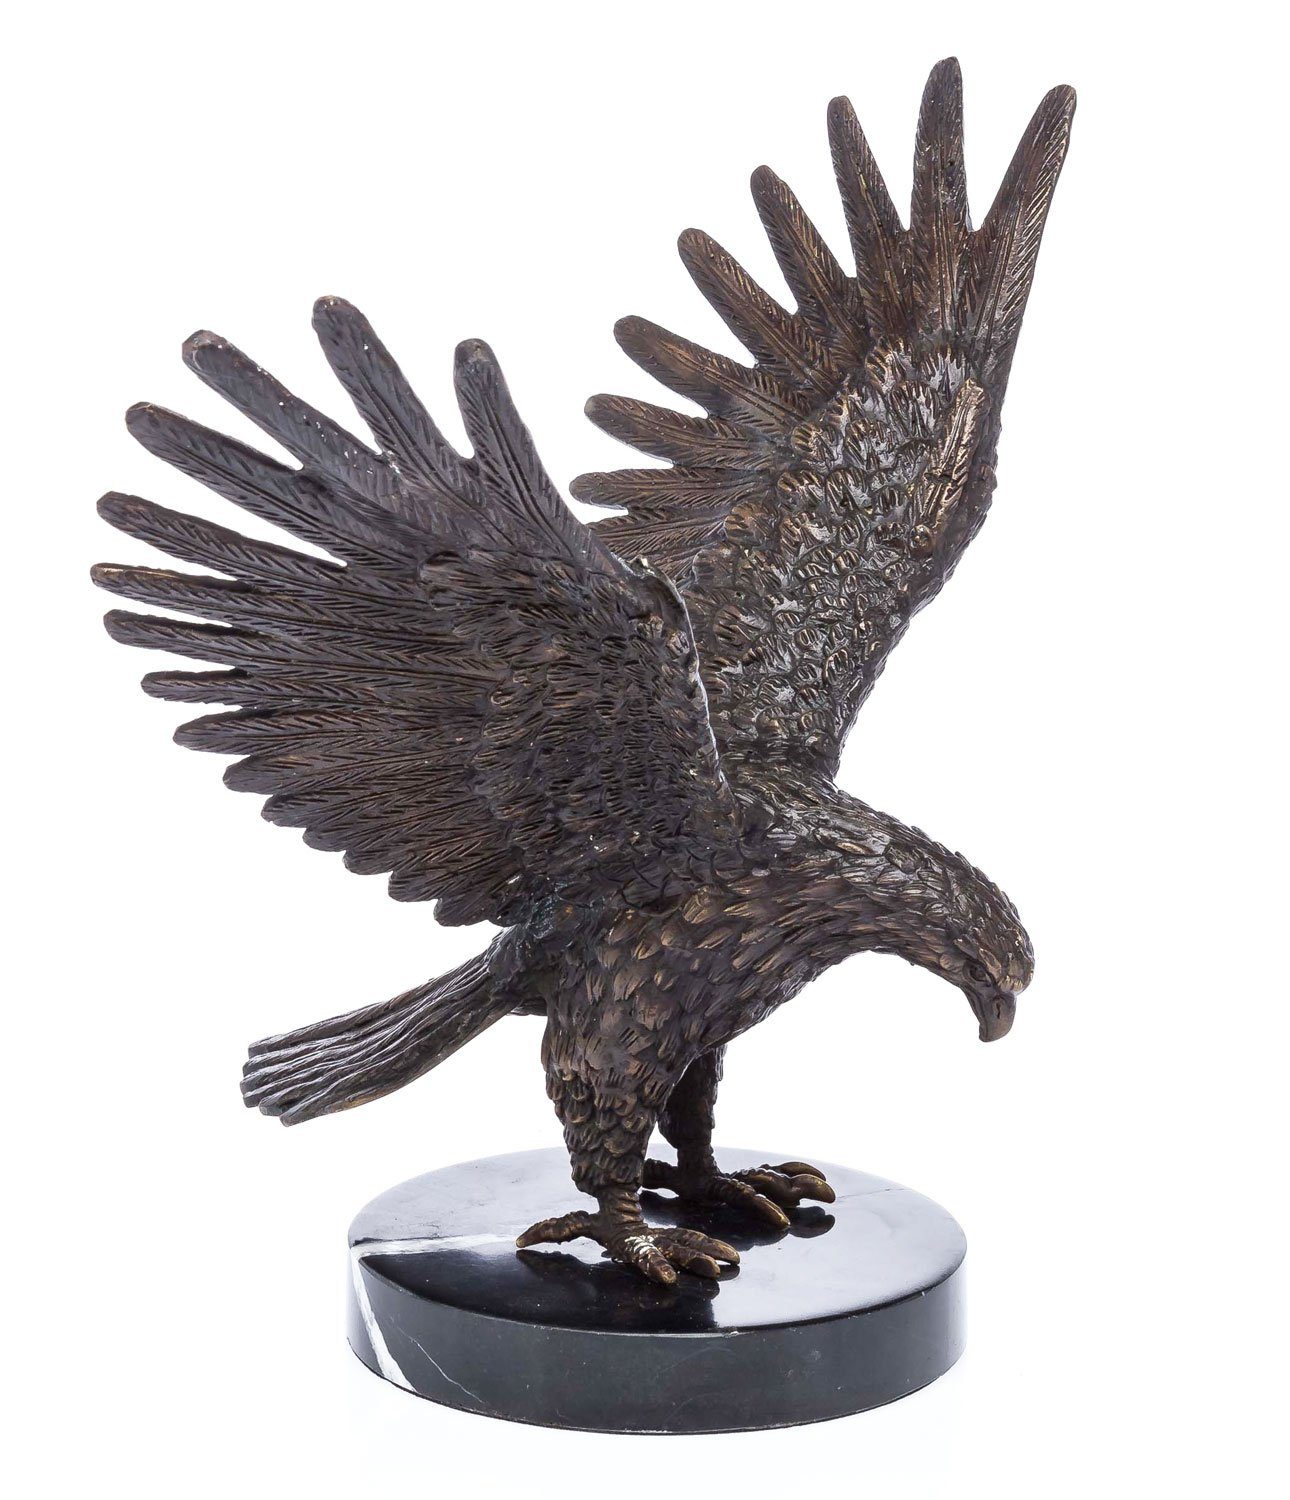 Aubaho Skulptur Bronze Skulptur Adler Bronzeskulptur sculpture eagle im antiken Stil g